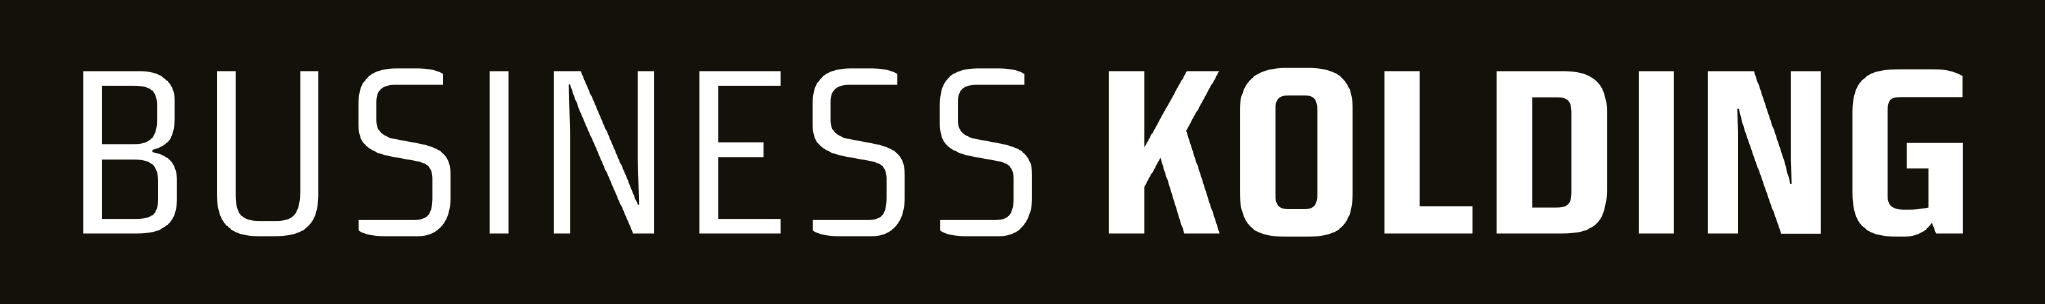 Business-Kolding_logo_cmyk.jpg